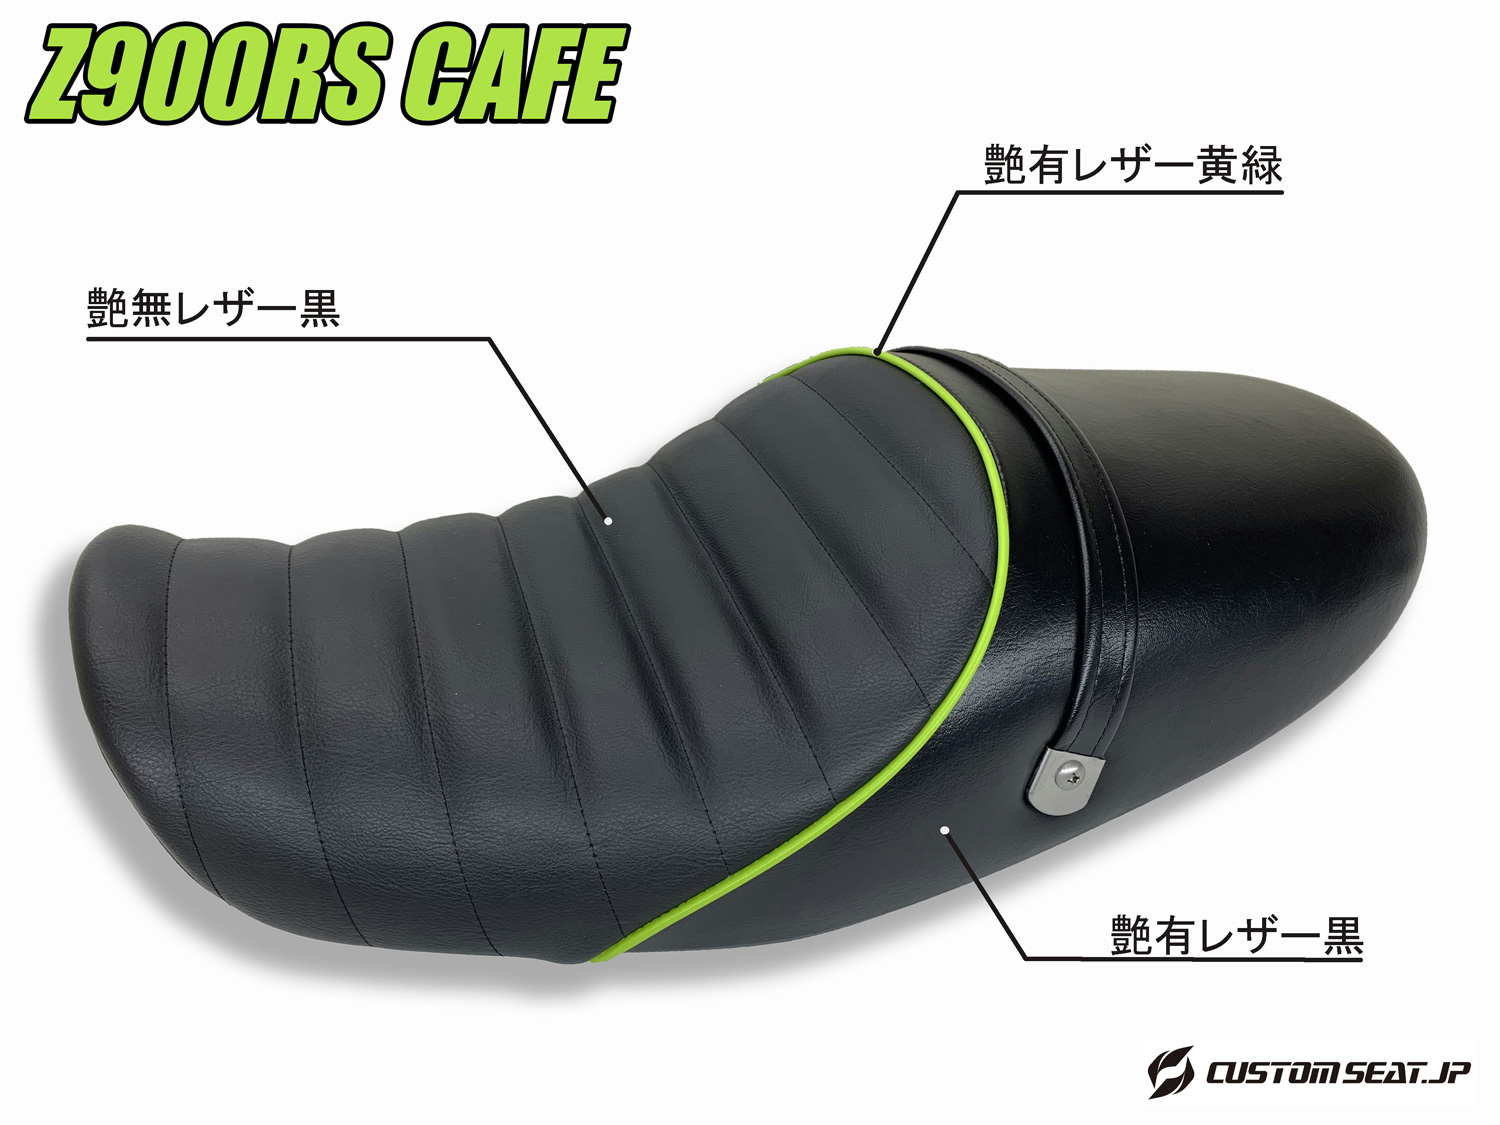 Z900rs cafe シートカスタム